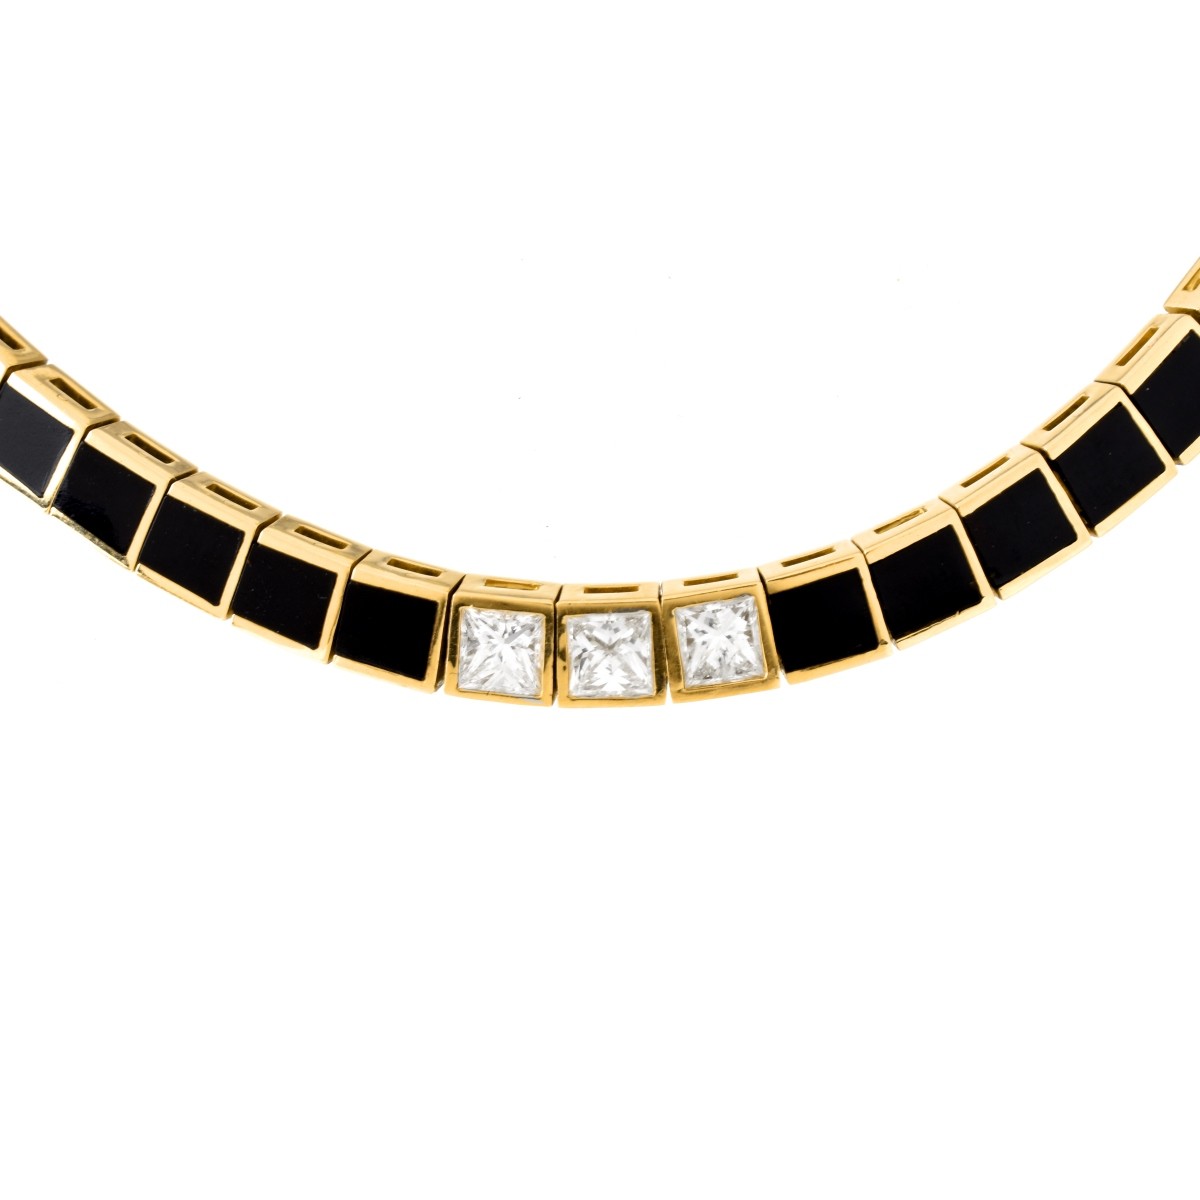 Diamond, Onyx and 18K Gold Choker Necklace